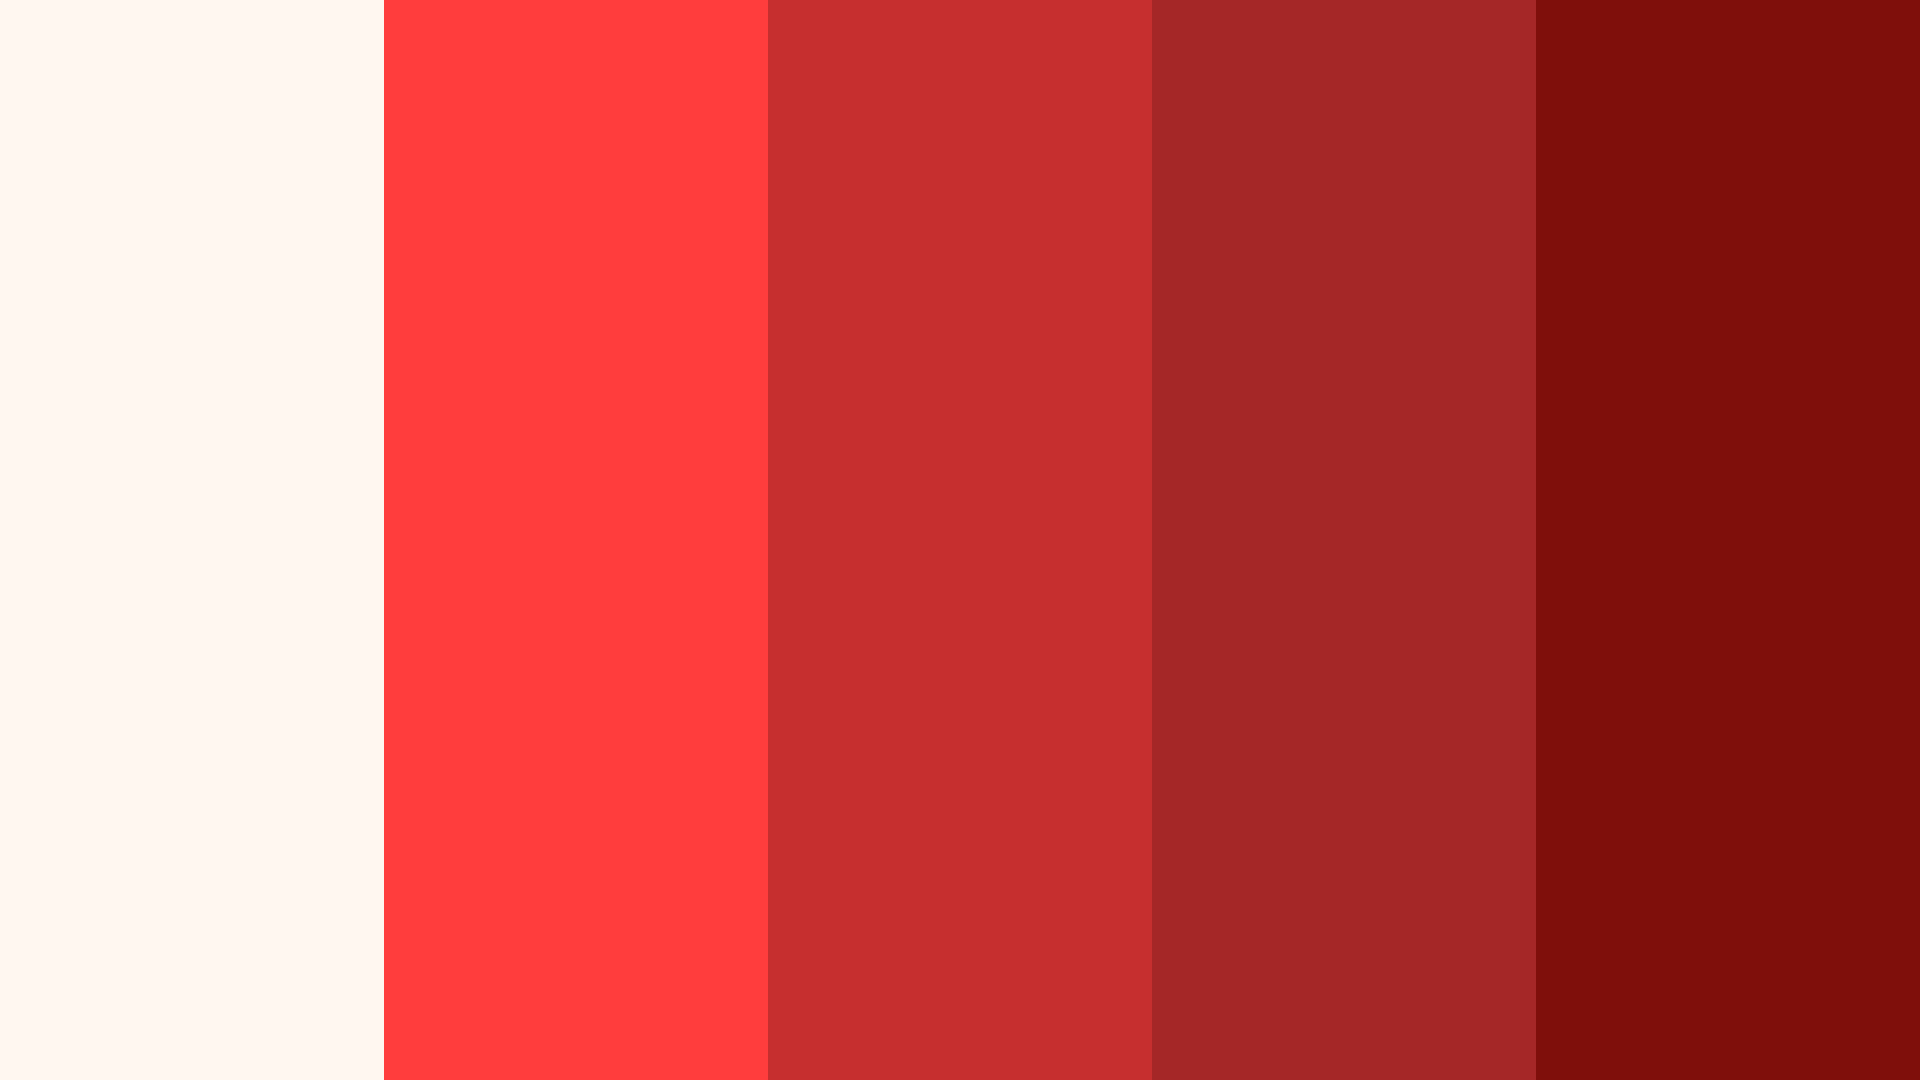 Scarlet Color